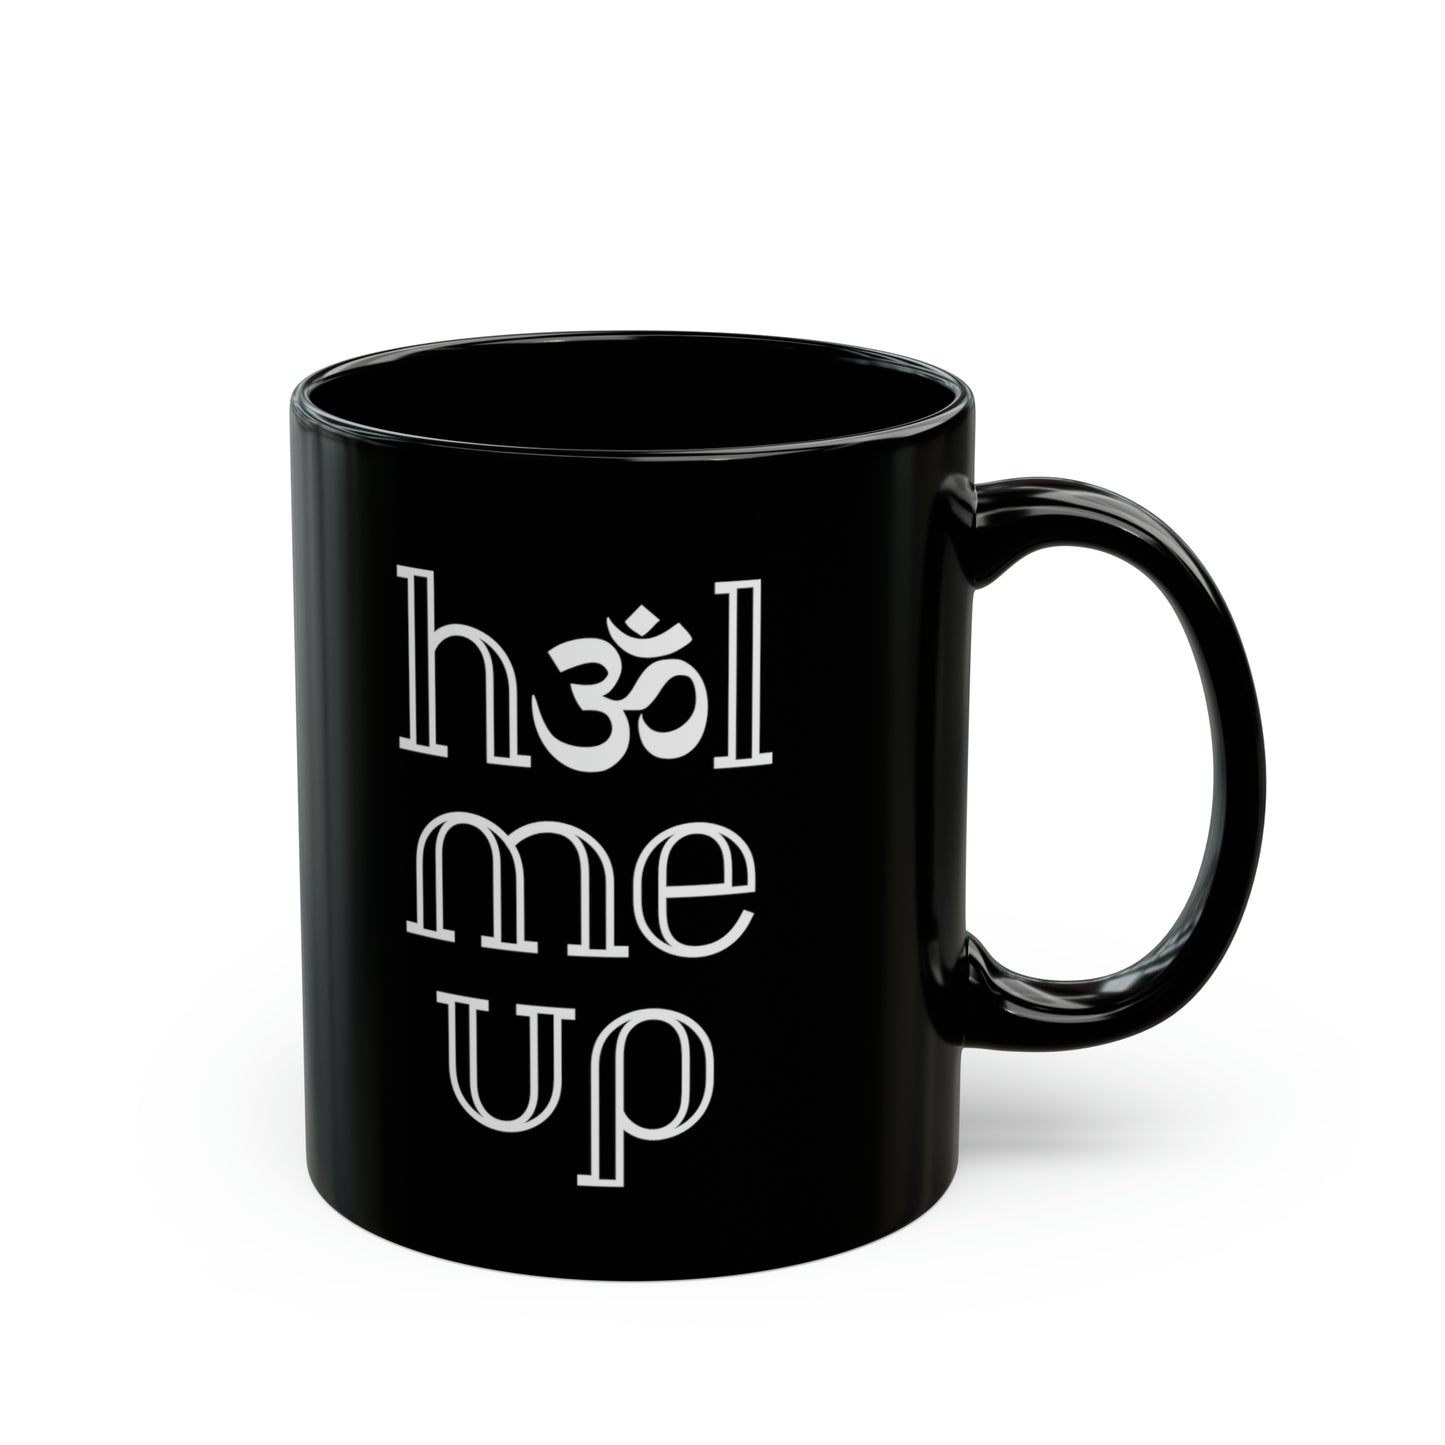 Heal me up Cup